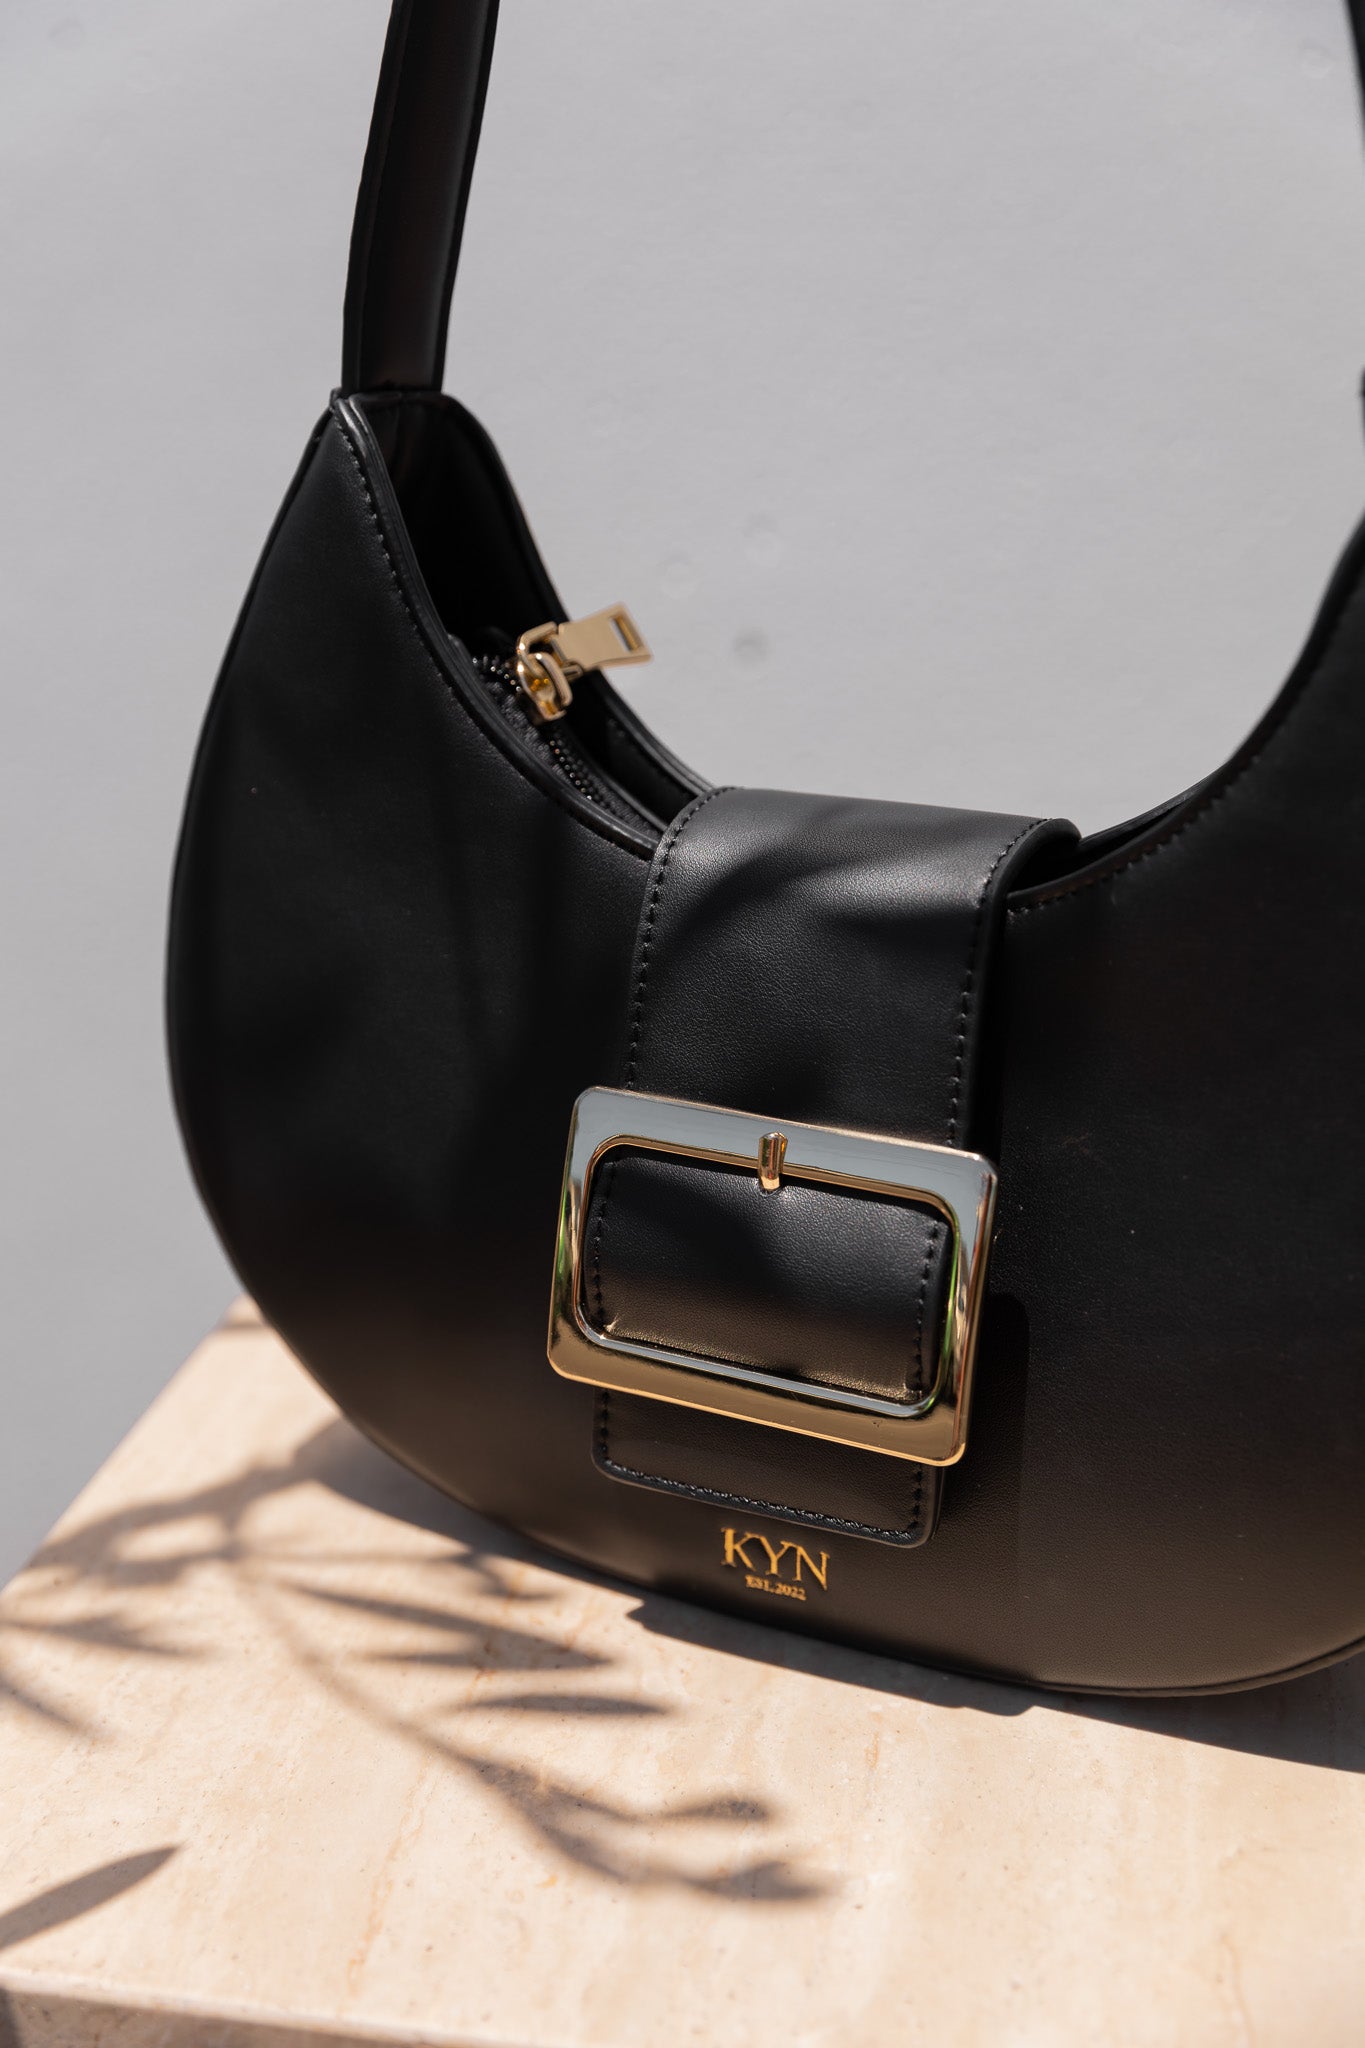 Kyn vegan leather handbag close up